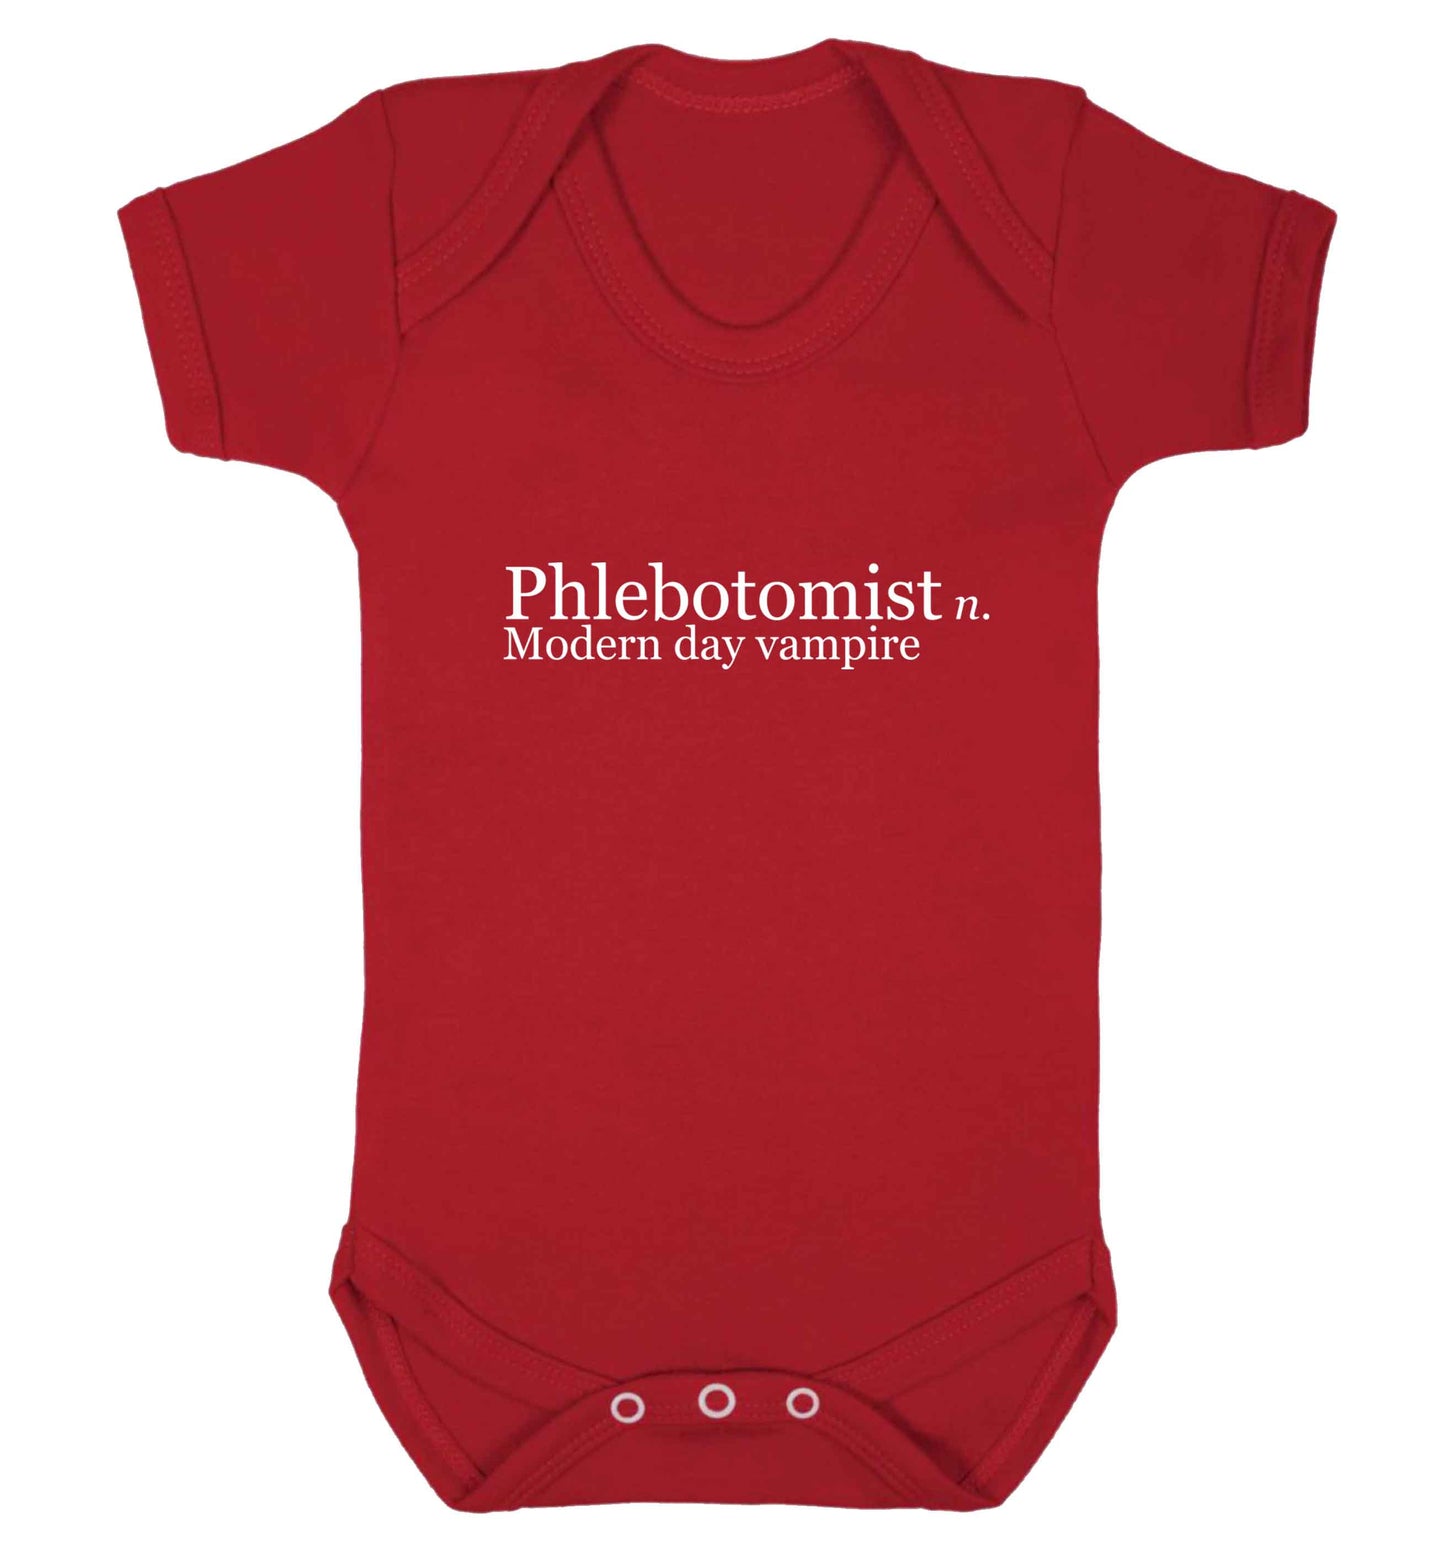 Phlebotomist - Modern day vampire baby vest red 18-24 months